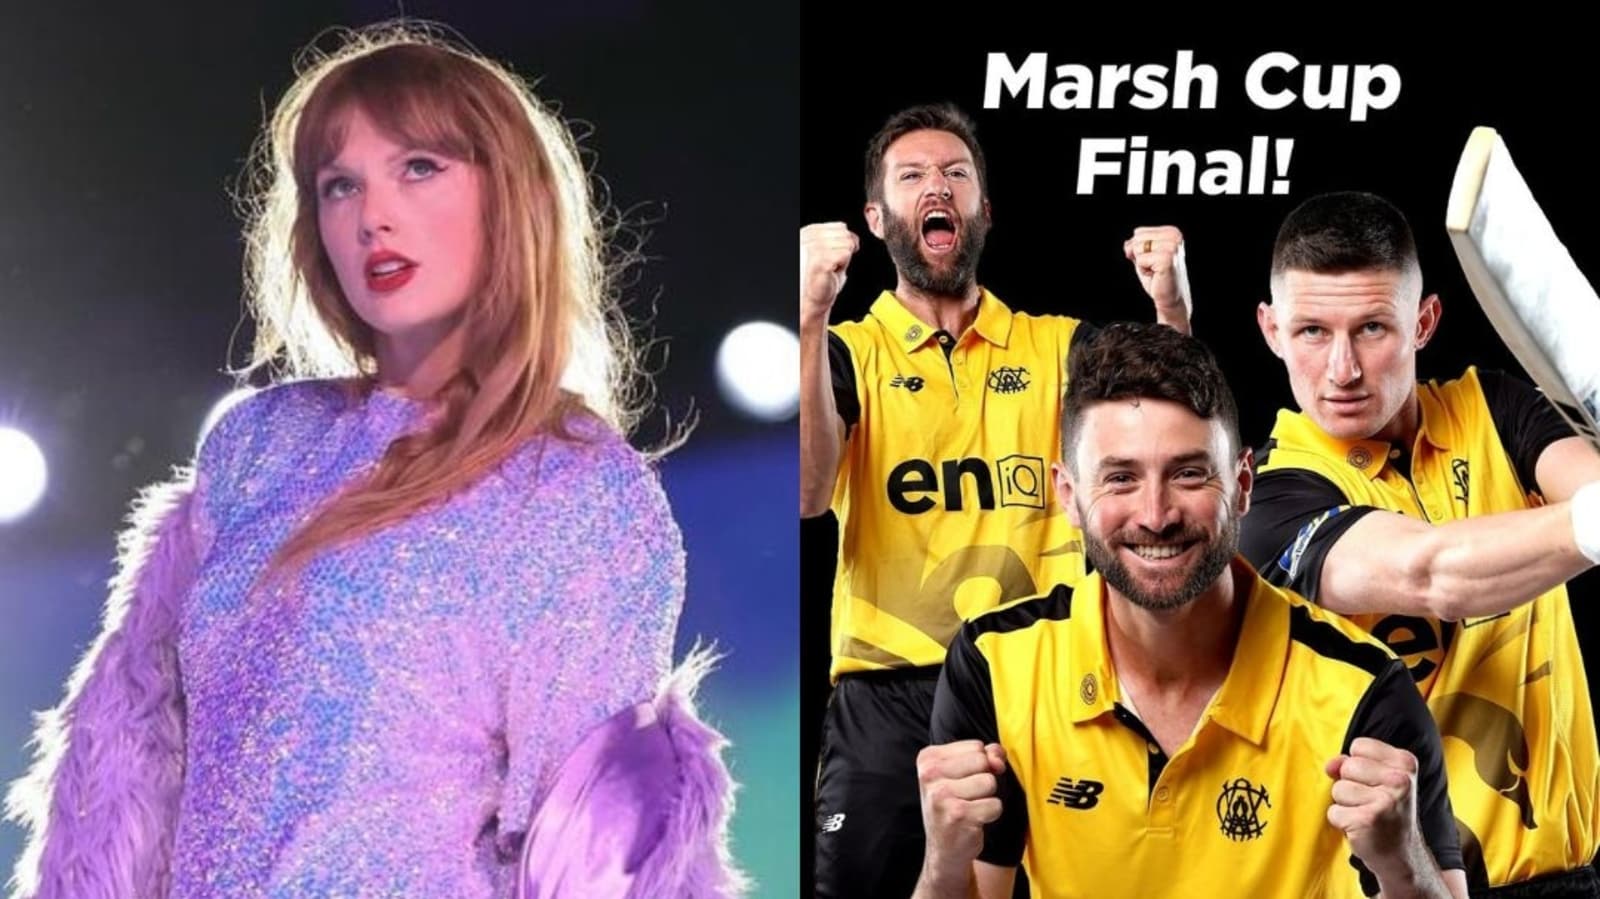 Taylor Swift fans’ Sydney rush pushes WA cricket team to indirect flights